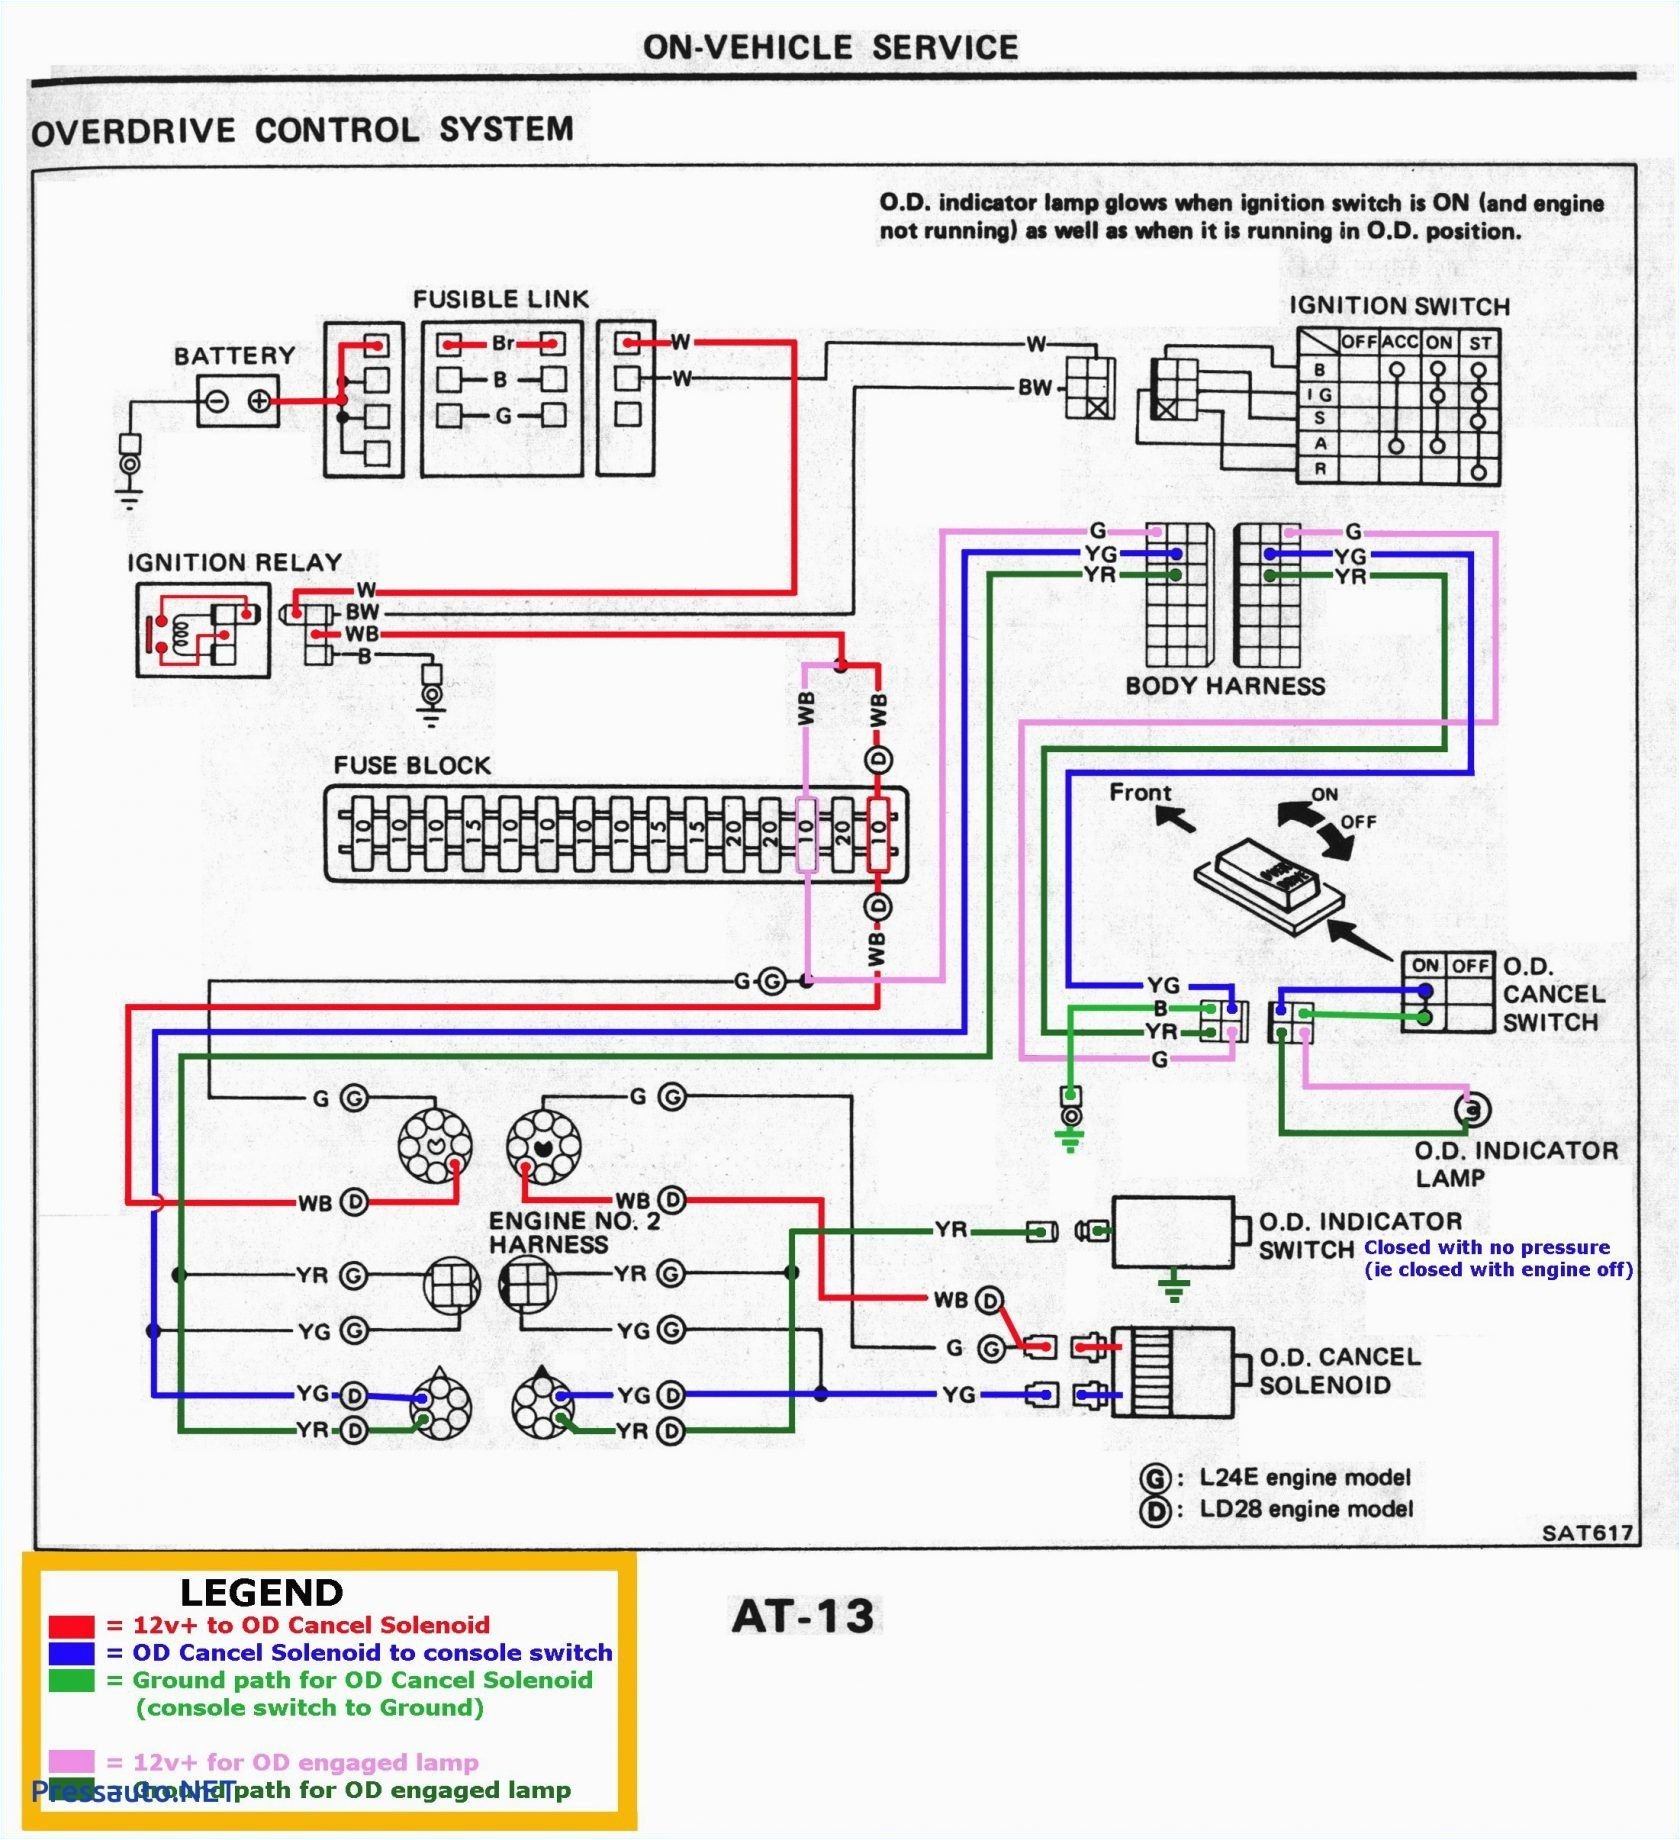 1991 s19 wiring diagram wiring diagram technic 1991 s19 wiring diagram